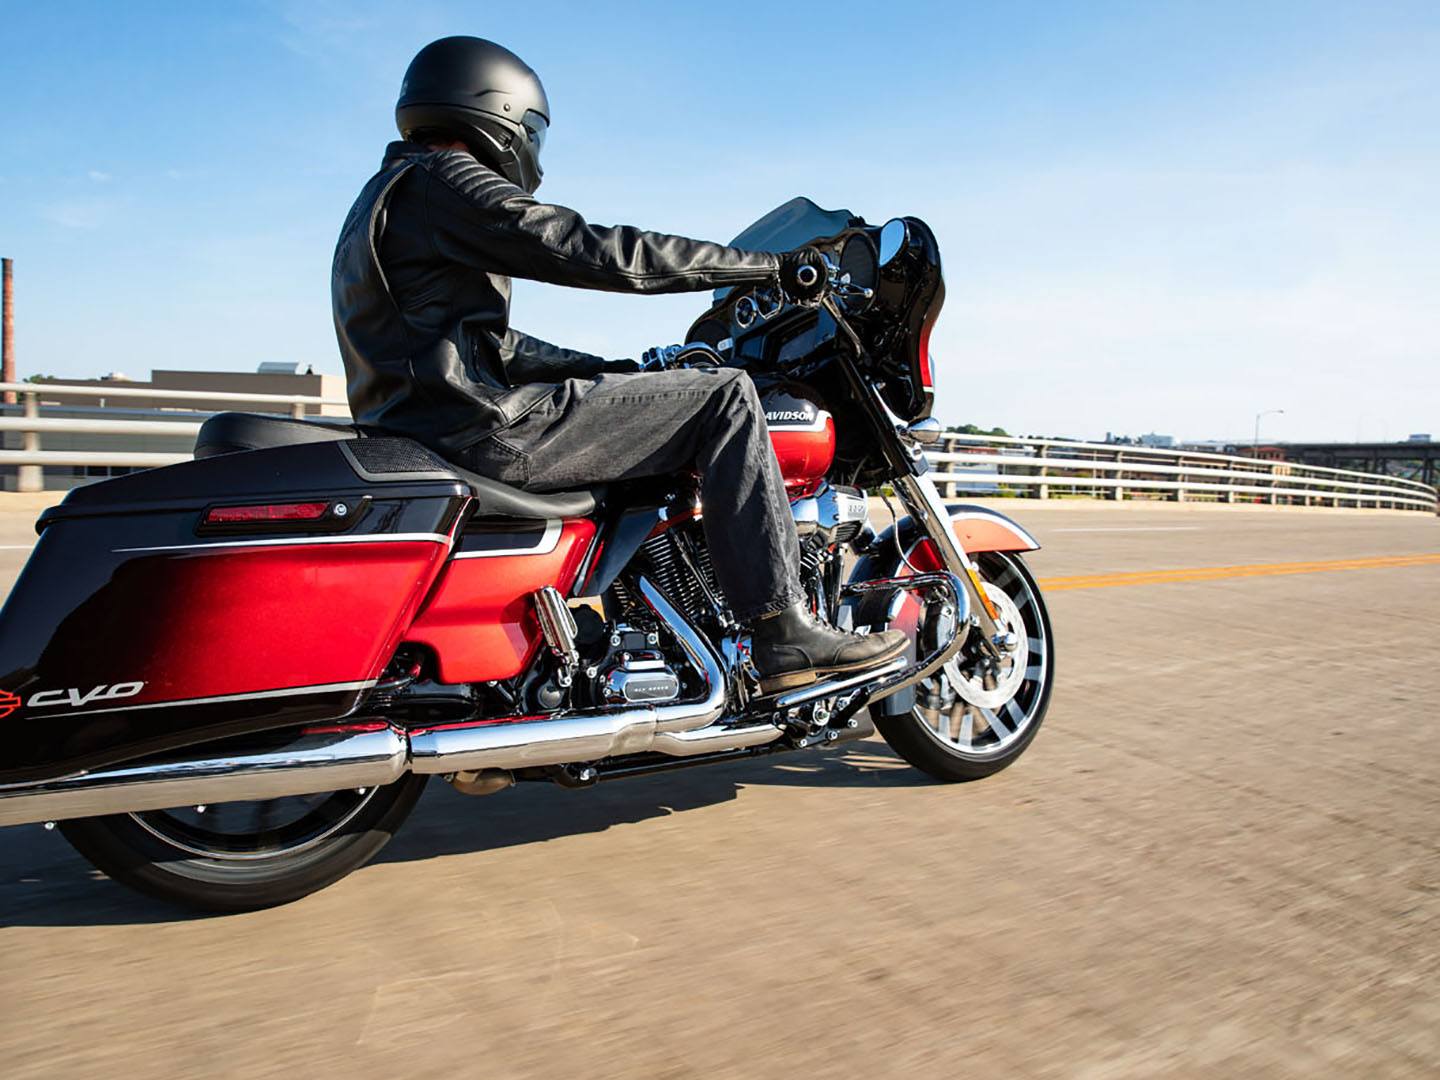 2021 Harley-Davidson CVO™ Street Glide® in Scott, Louisiana - Photo 16